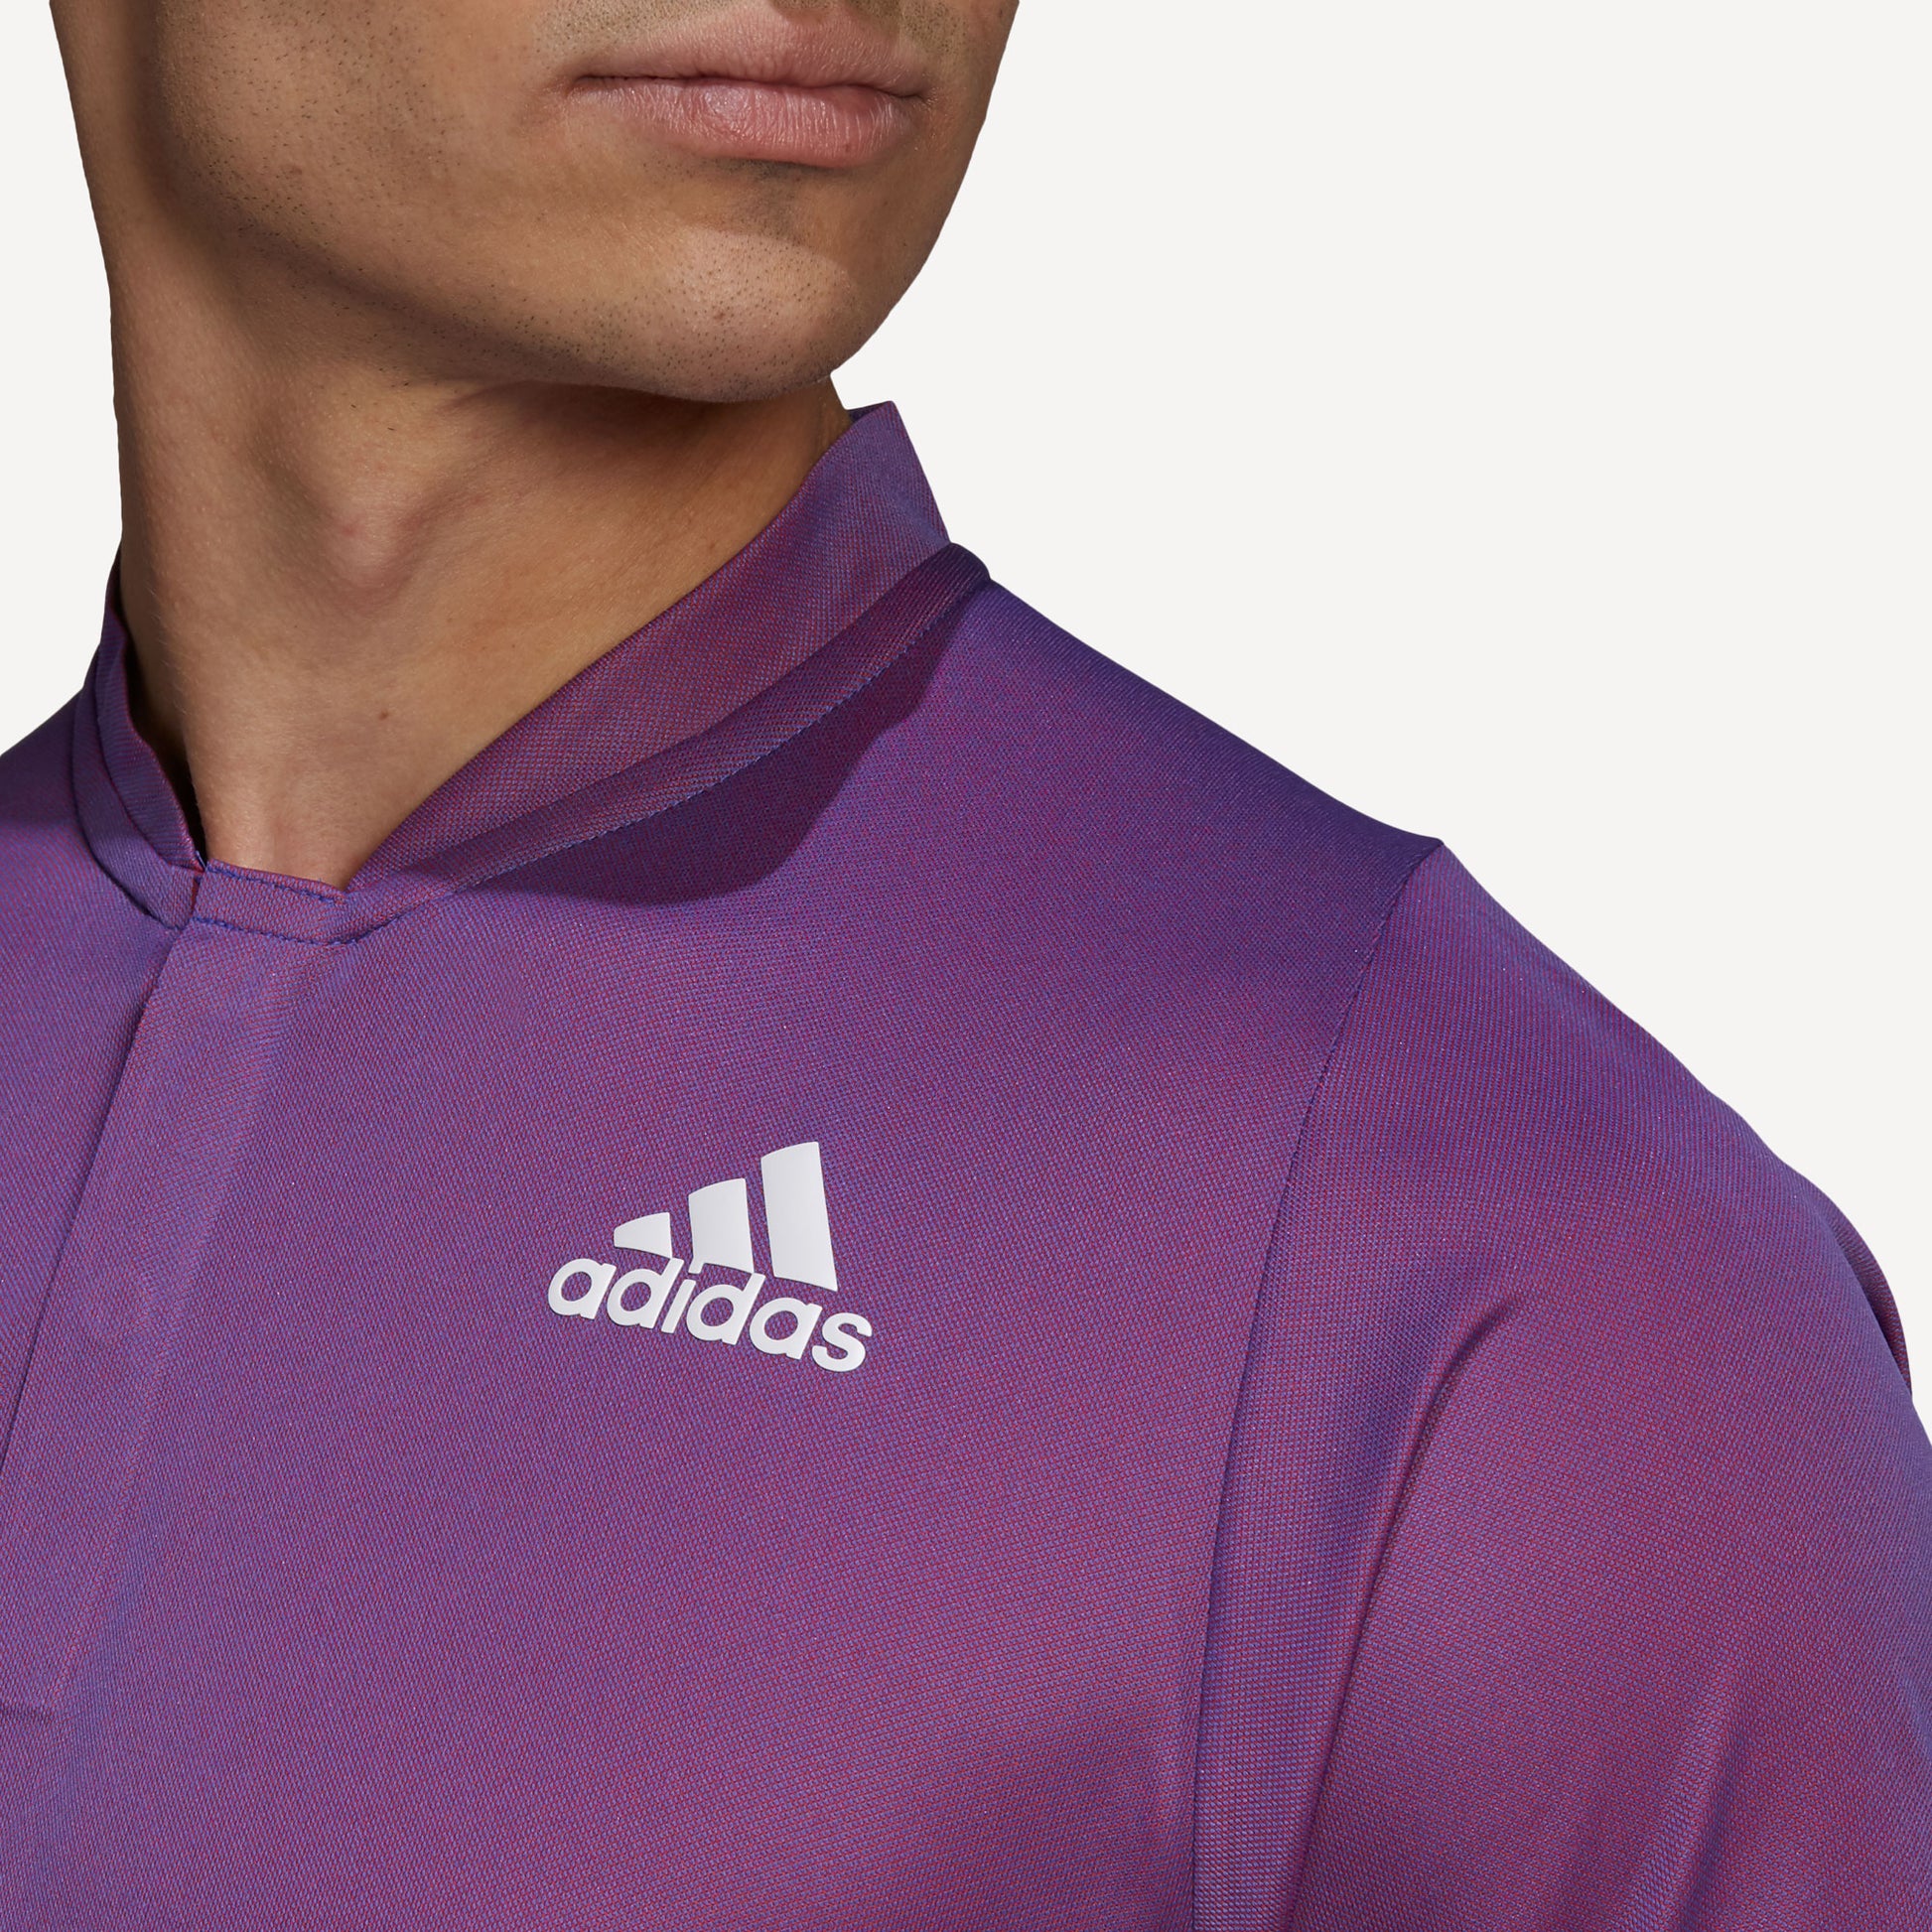 adidas Freelift Primeblue Men's Tennis Polo Purple (4)